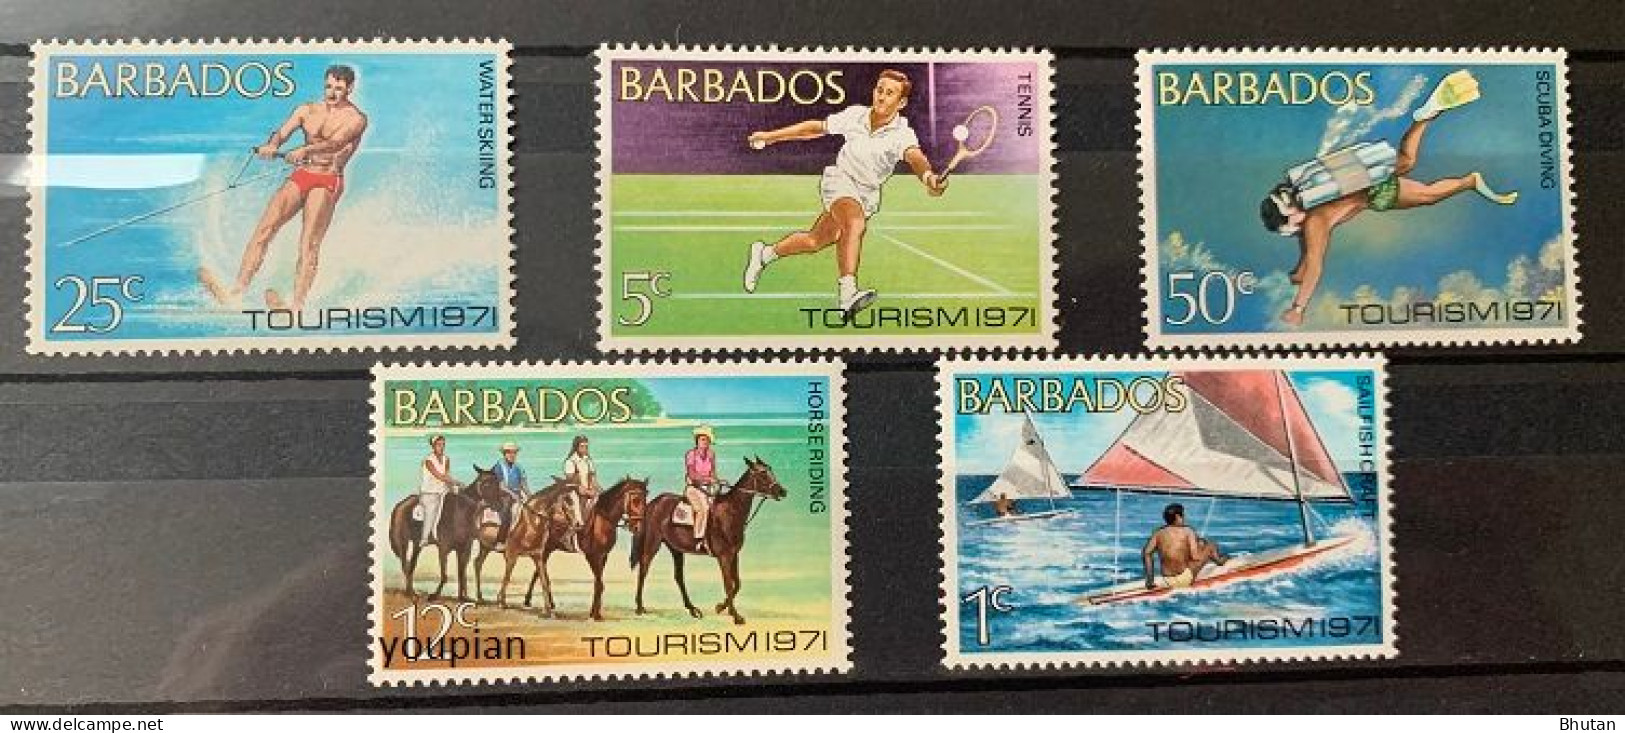 Barbados 1971, Tourism, MNH Stamps Set - Barbados (1966-...)